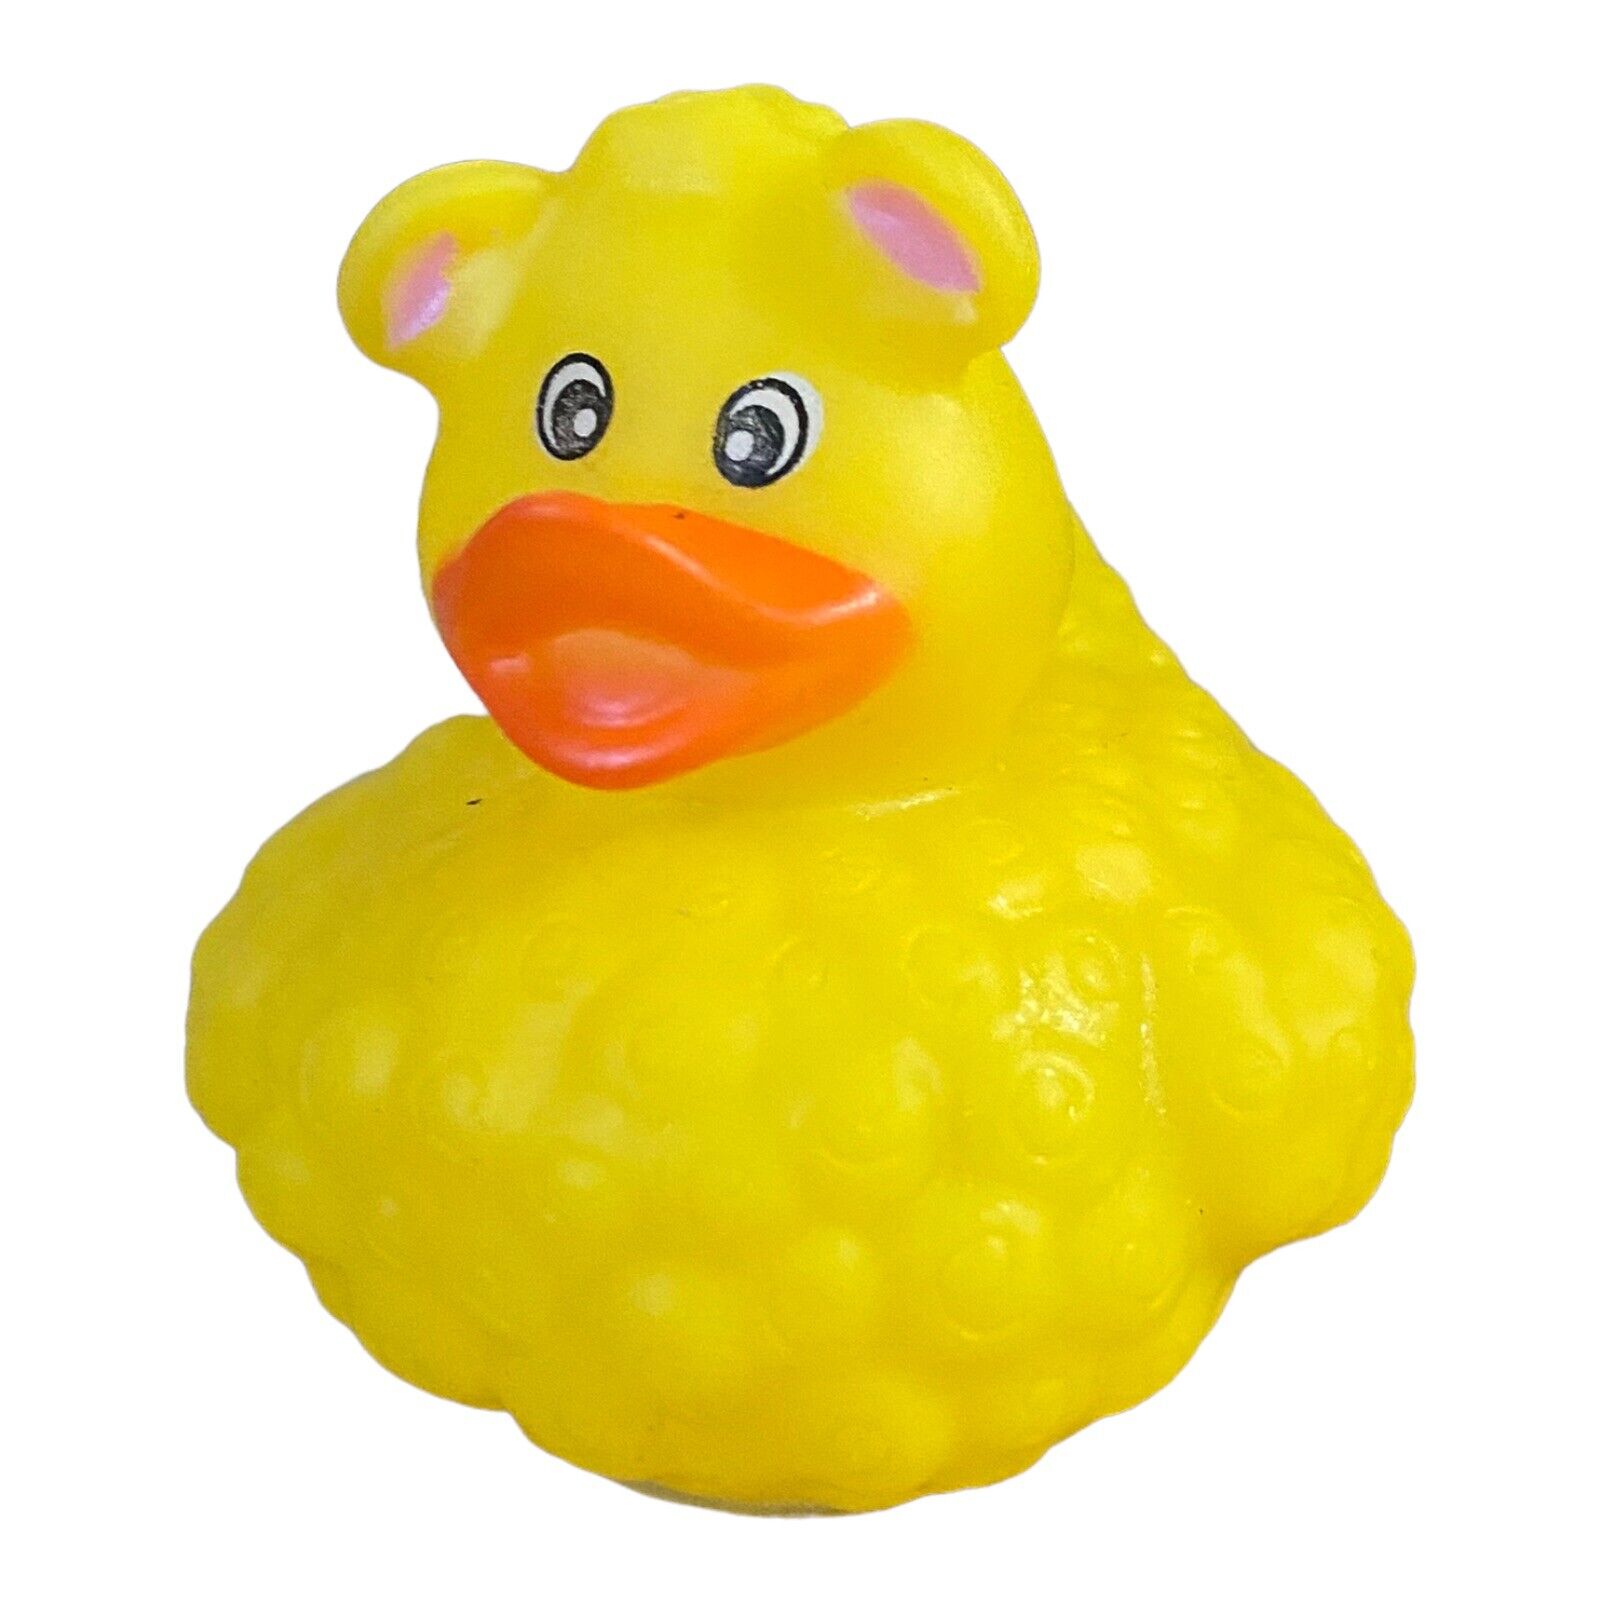 Mountain Man Treasure Rubber Duck Reseller Duck - Young Big Eye Yellow Duck